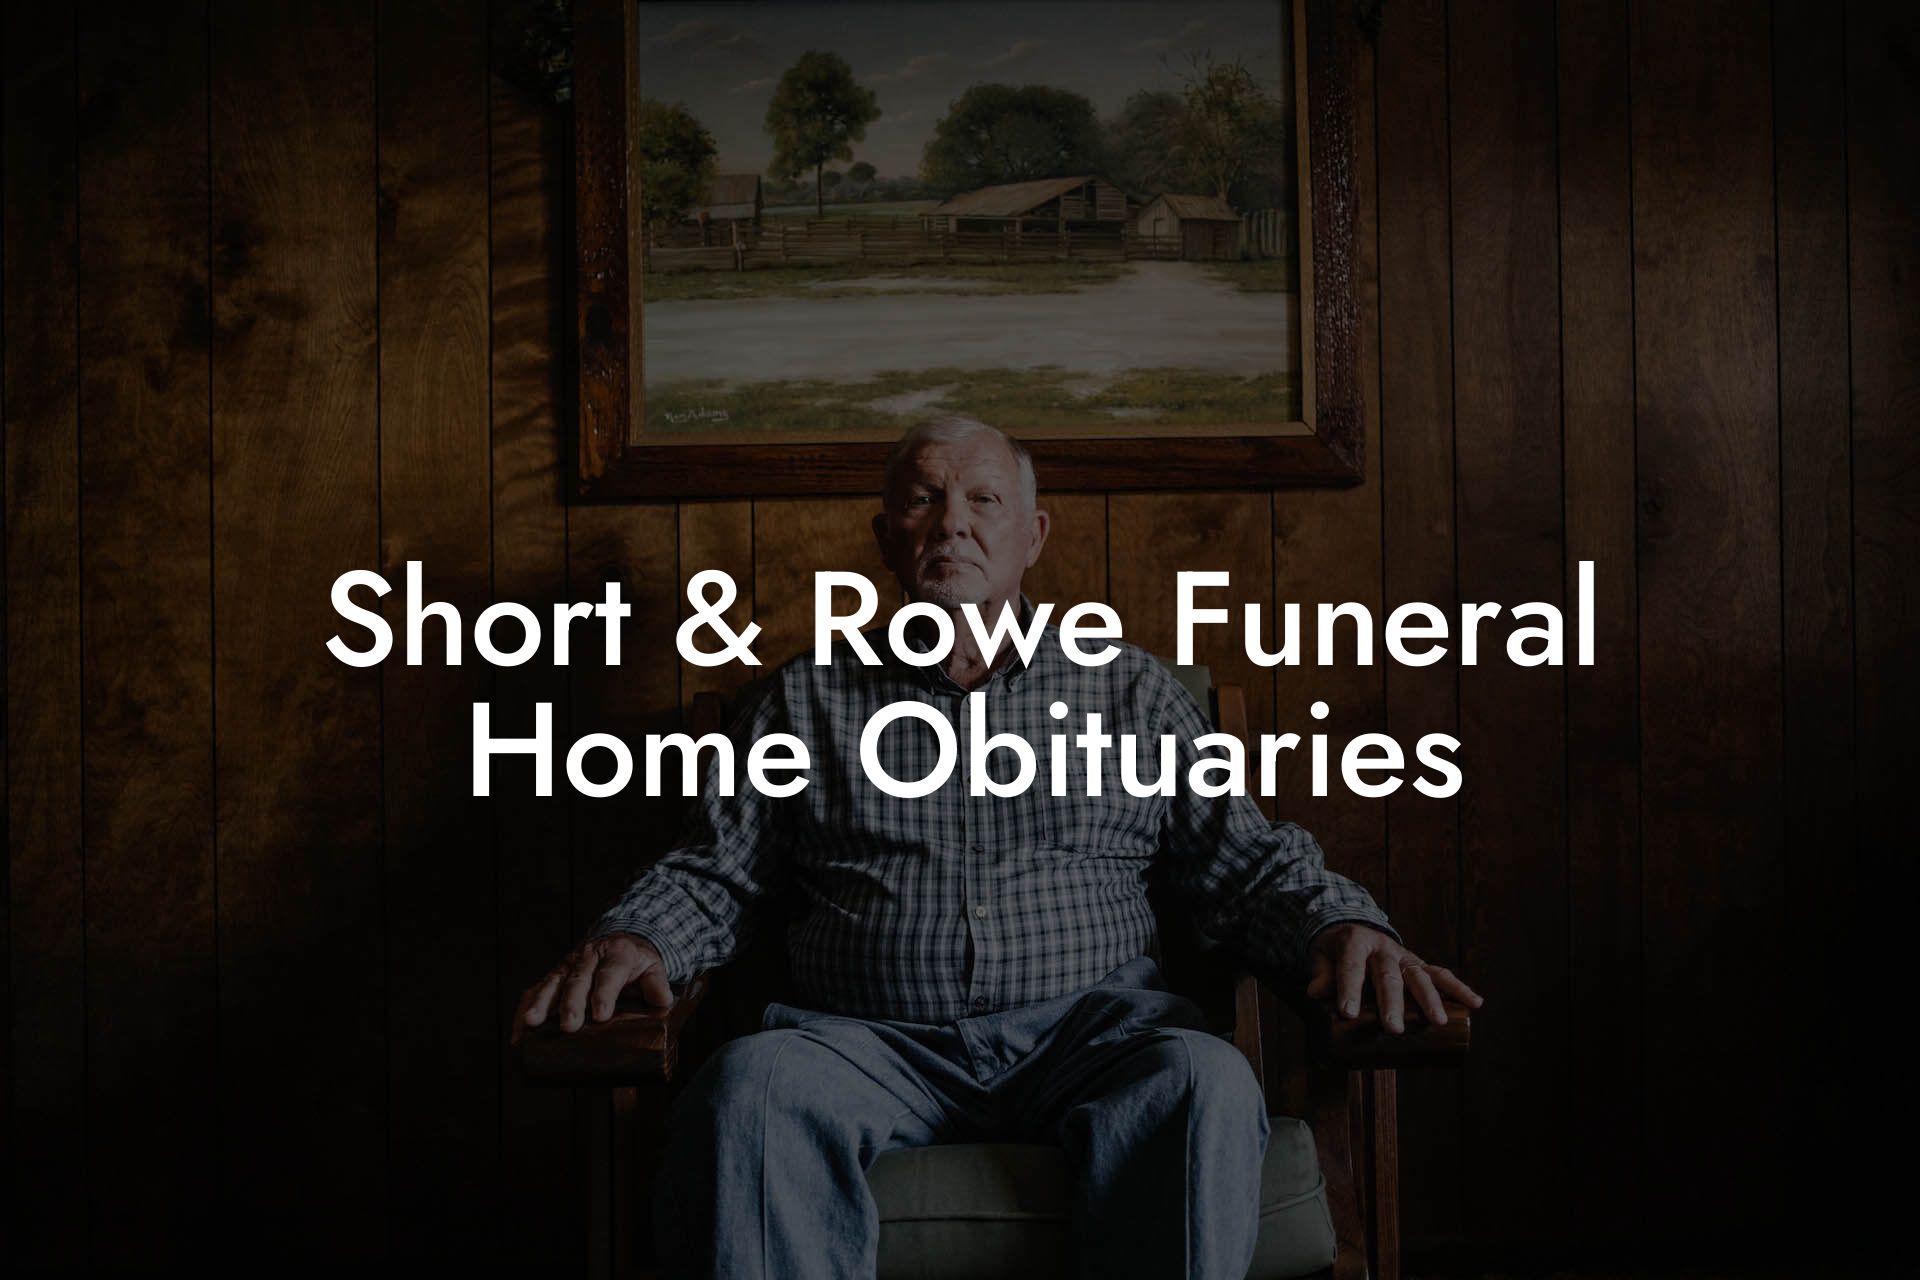 Short & Rowe Funeral Home Obituaries